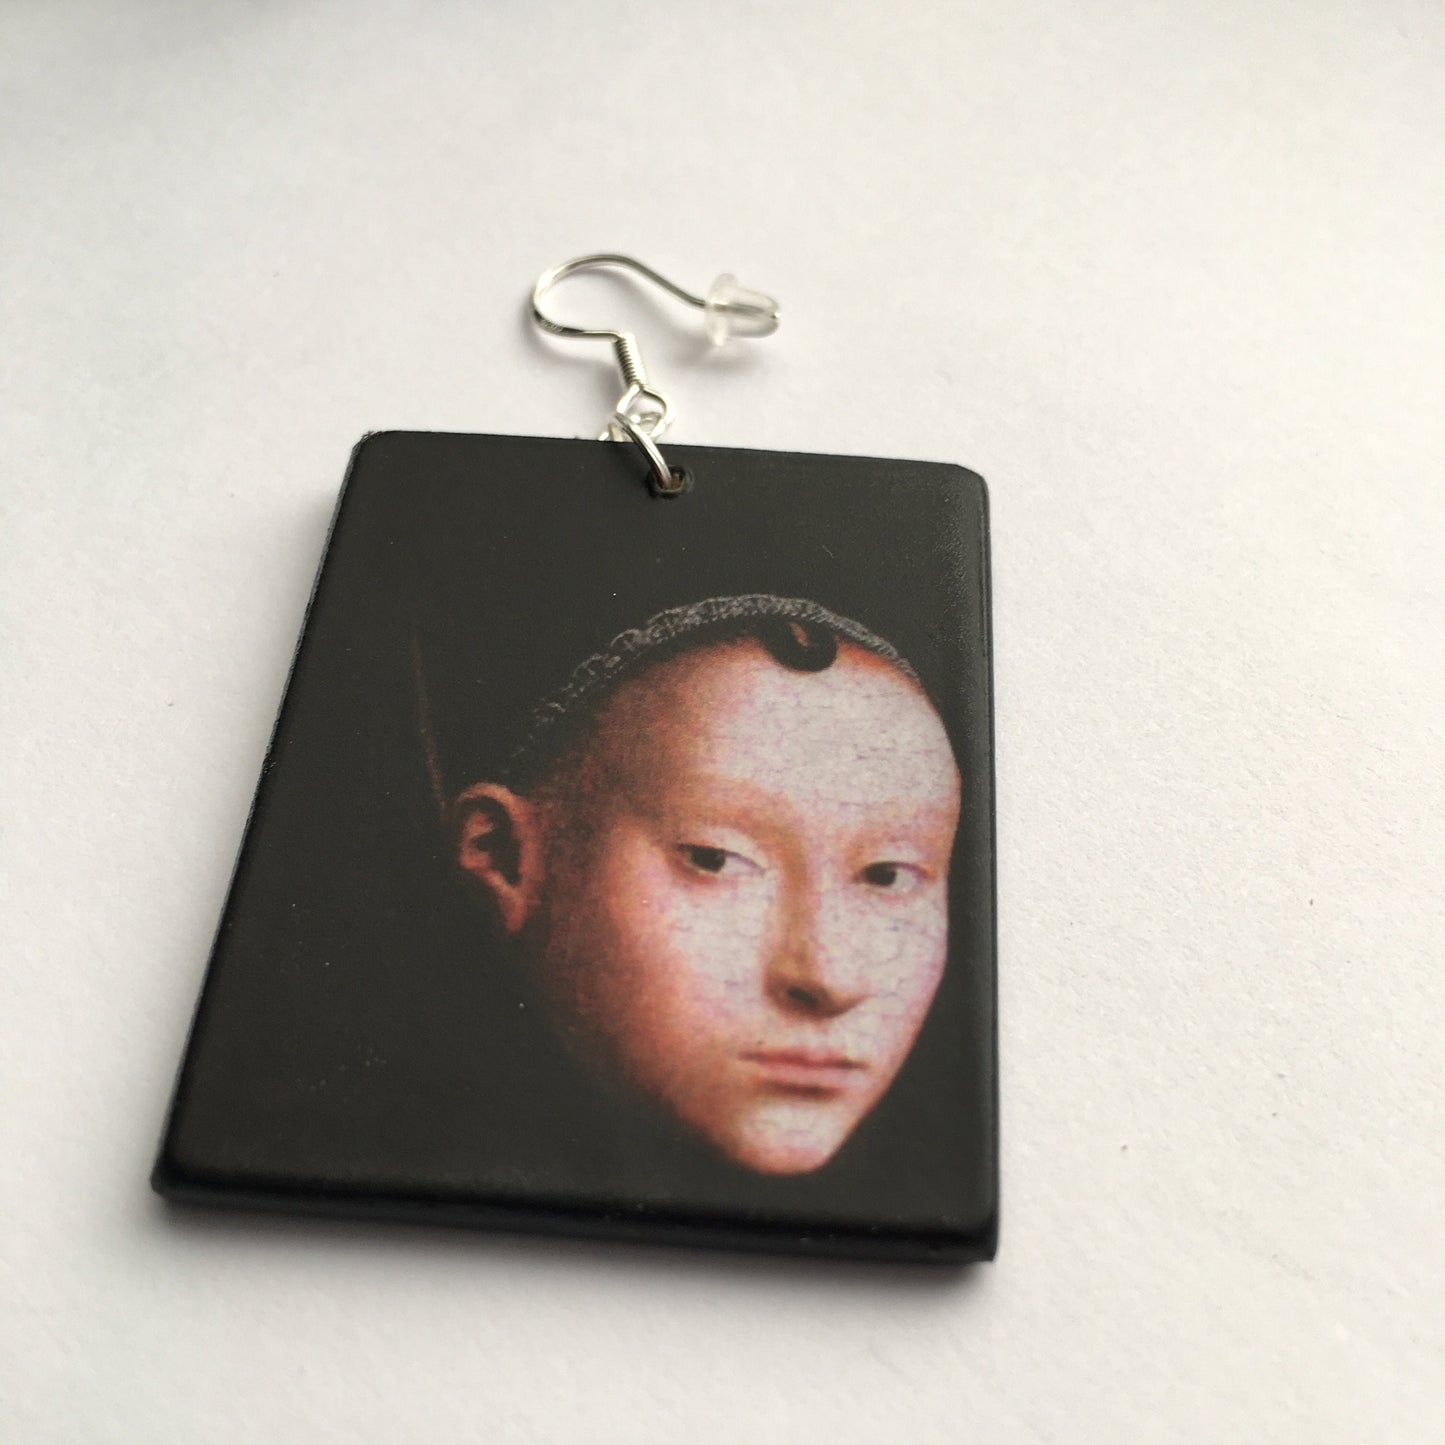 Petrus Christus, Renaissance art, inspired earrings.